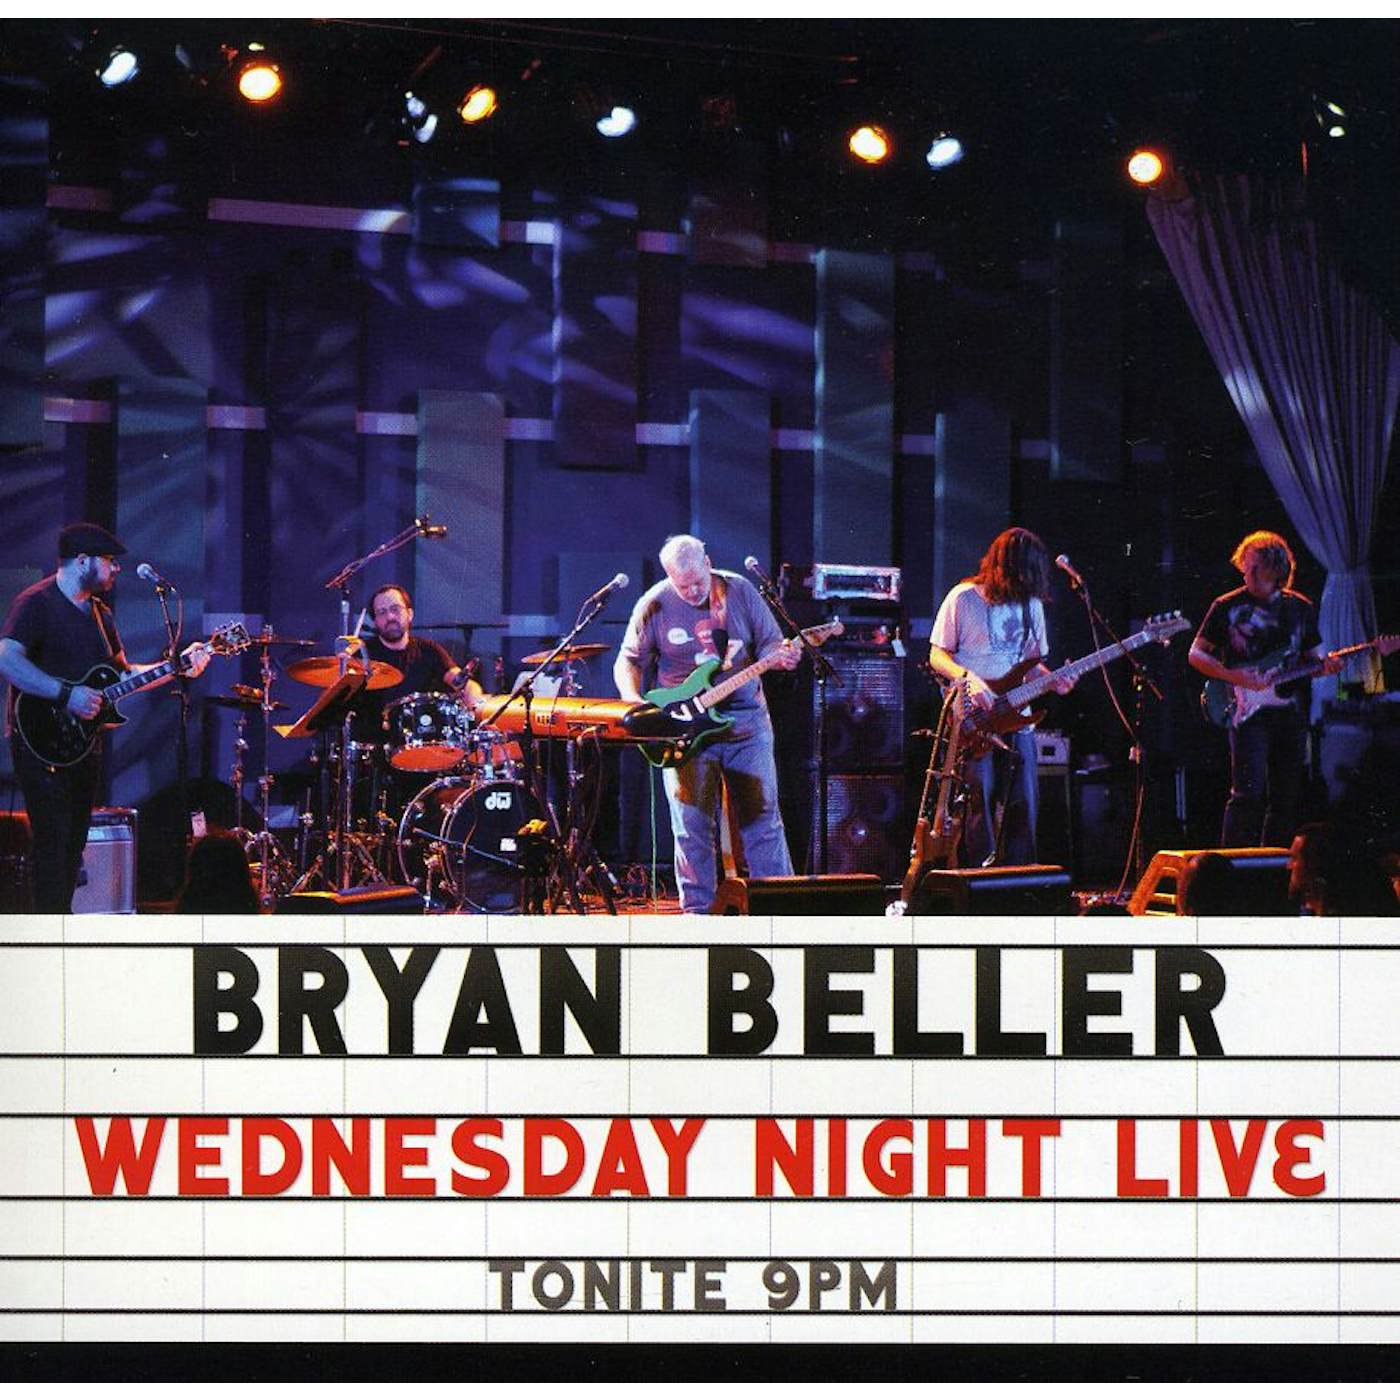 Bryan Beller WEDNESDAY NIGHT LIVE CD